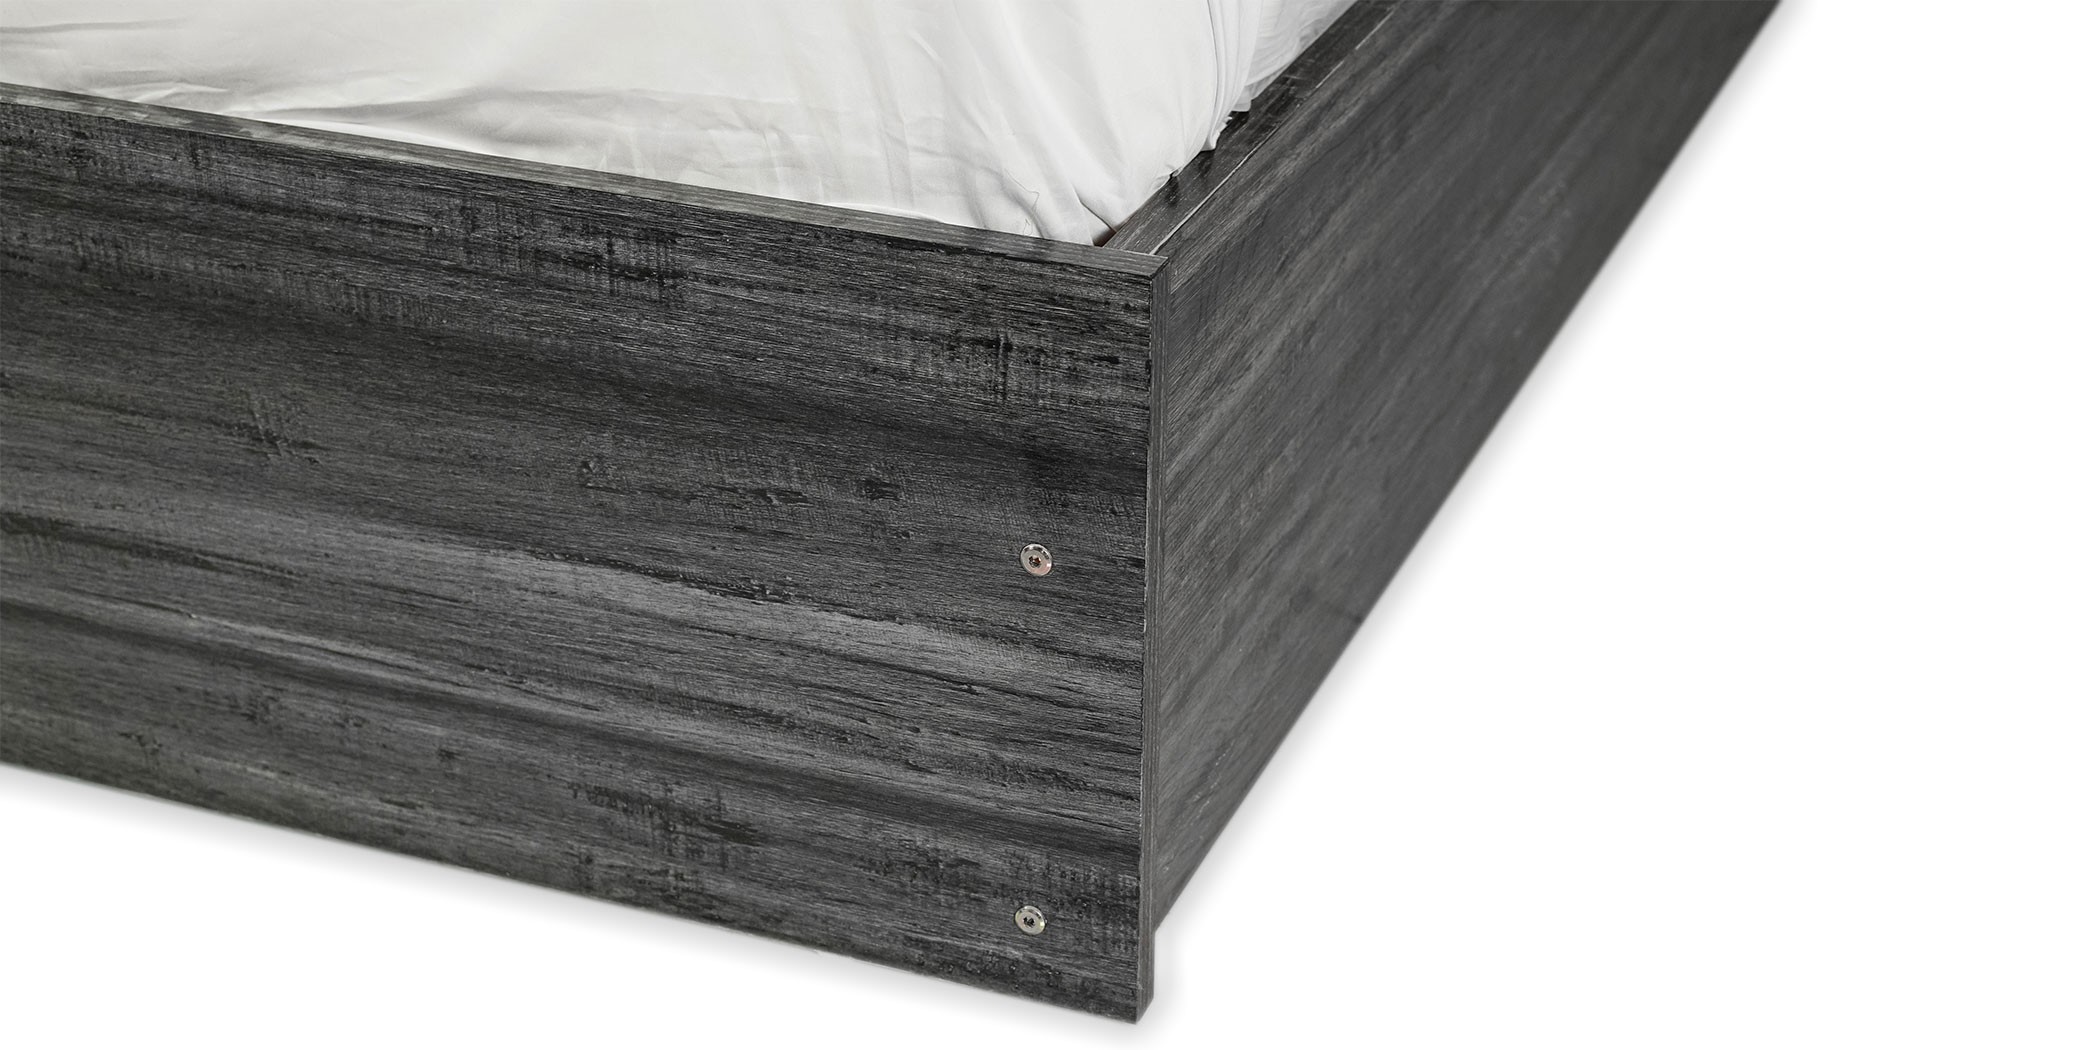 Willington Bed 180x200cm In Plywood Black Oak